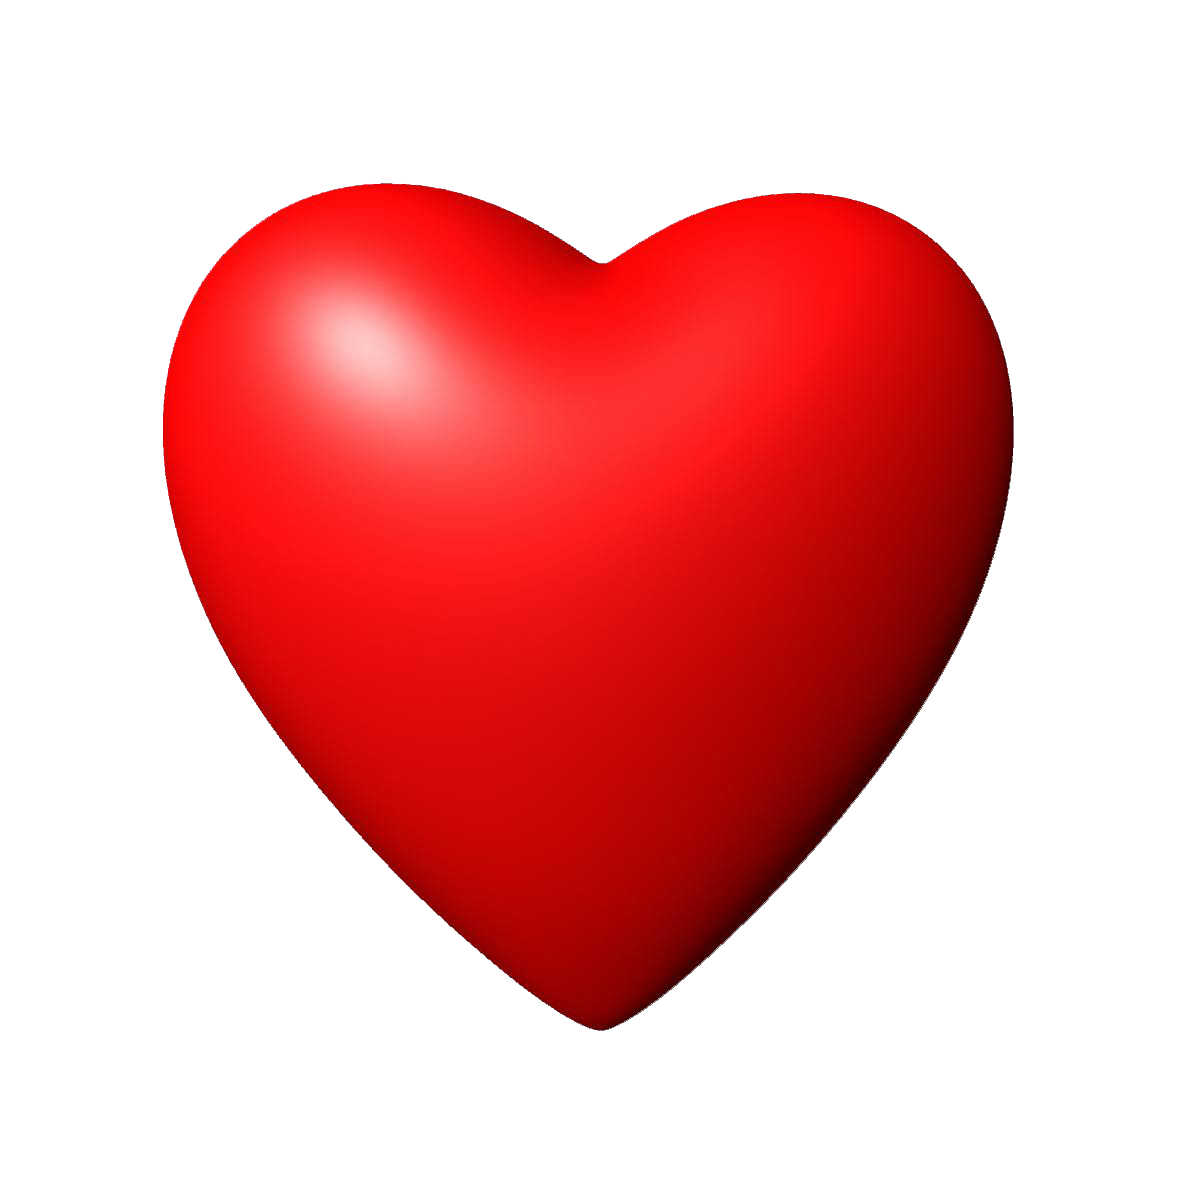 Download 3D Red  Heart  Image  HQ PNG Image  FreePNGImg